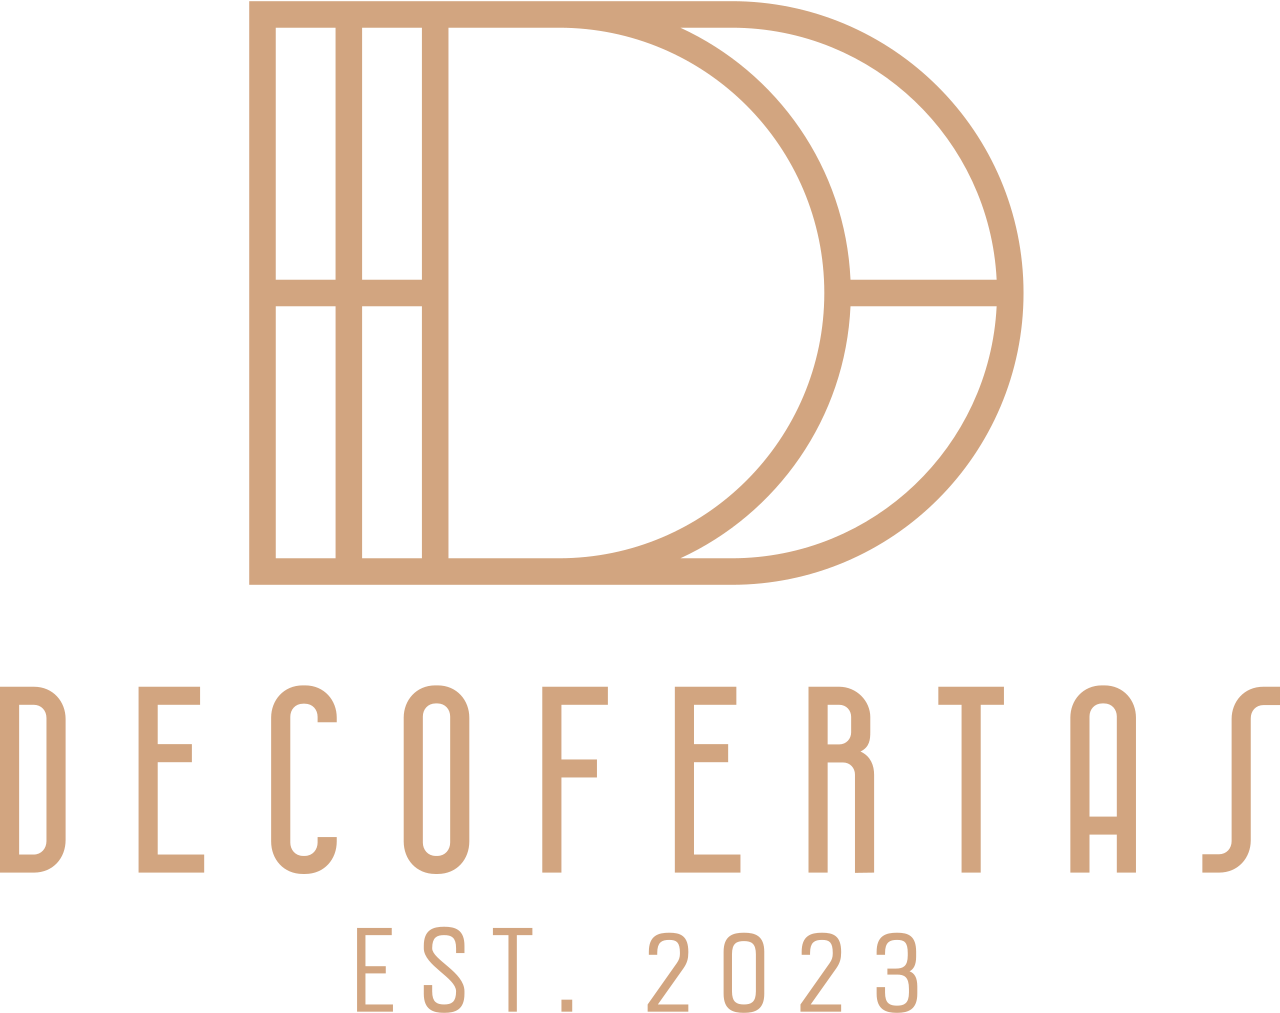 Decofertas's logo